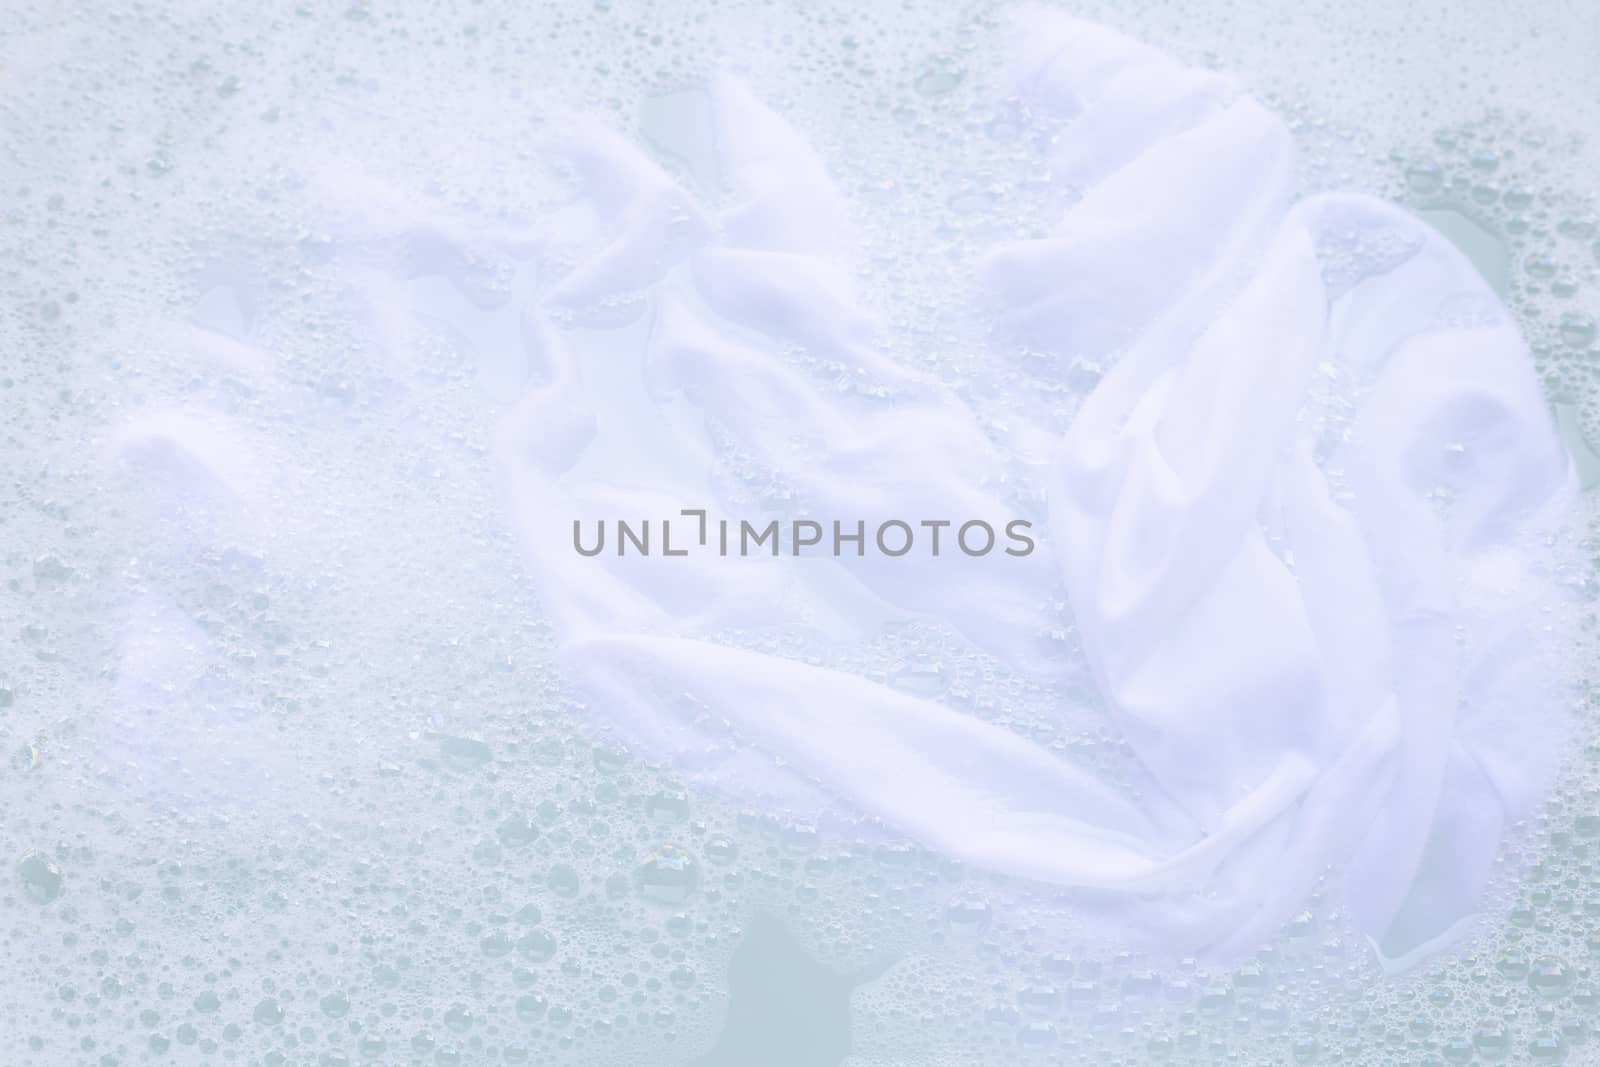 Soak cloth before washing, white cloth by Bowonpat